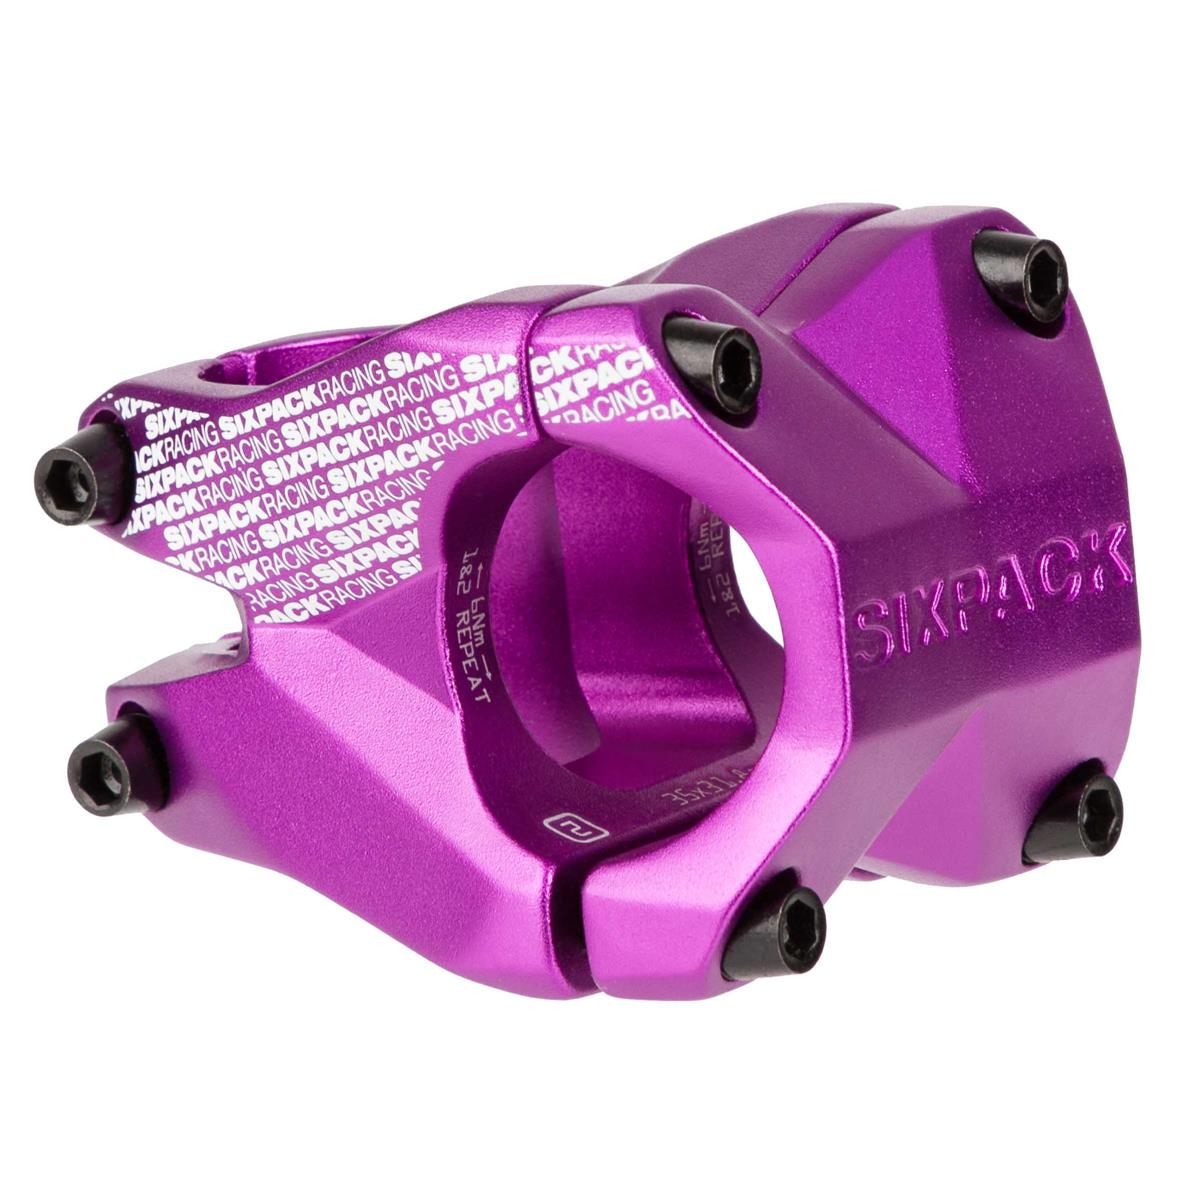 Sixpack Potence VTT Menace Purple, 31.8 mm, 35 mm Reach